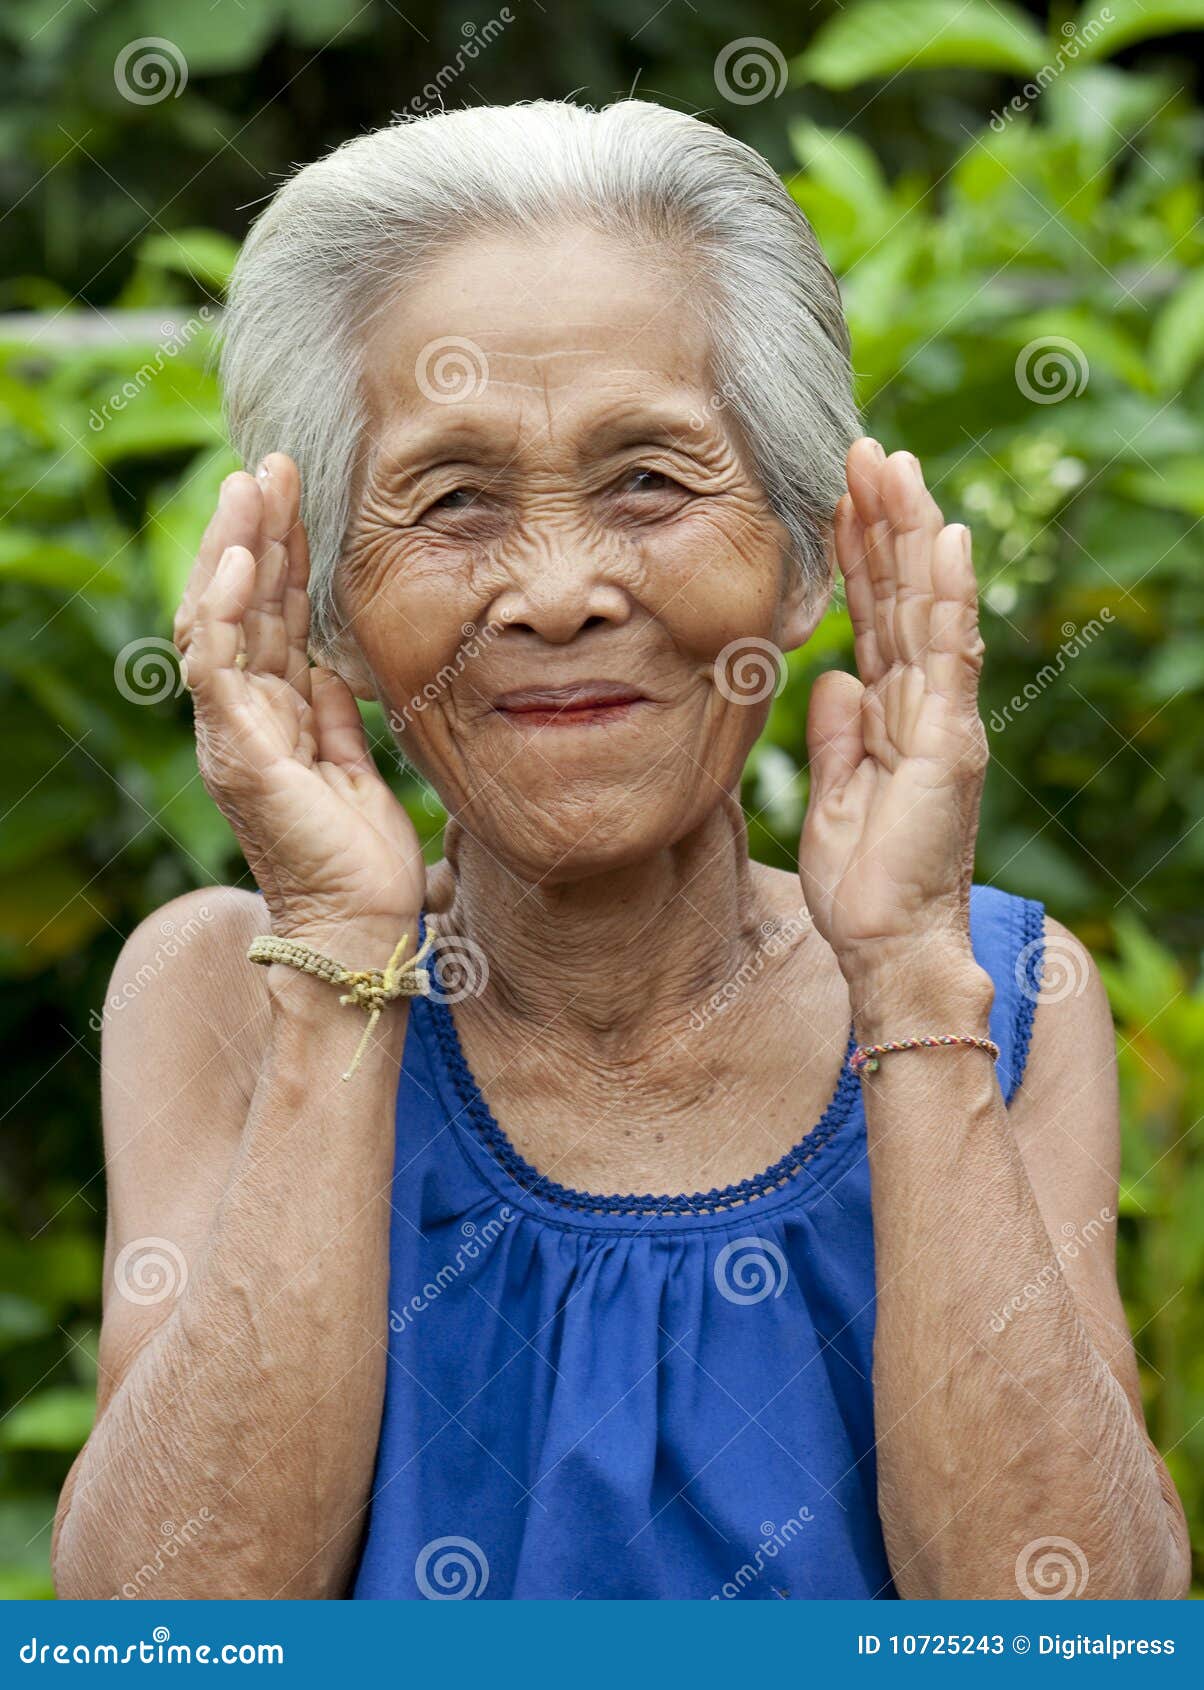 portrait-old-asian-woman-gestures-10725243.jpg